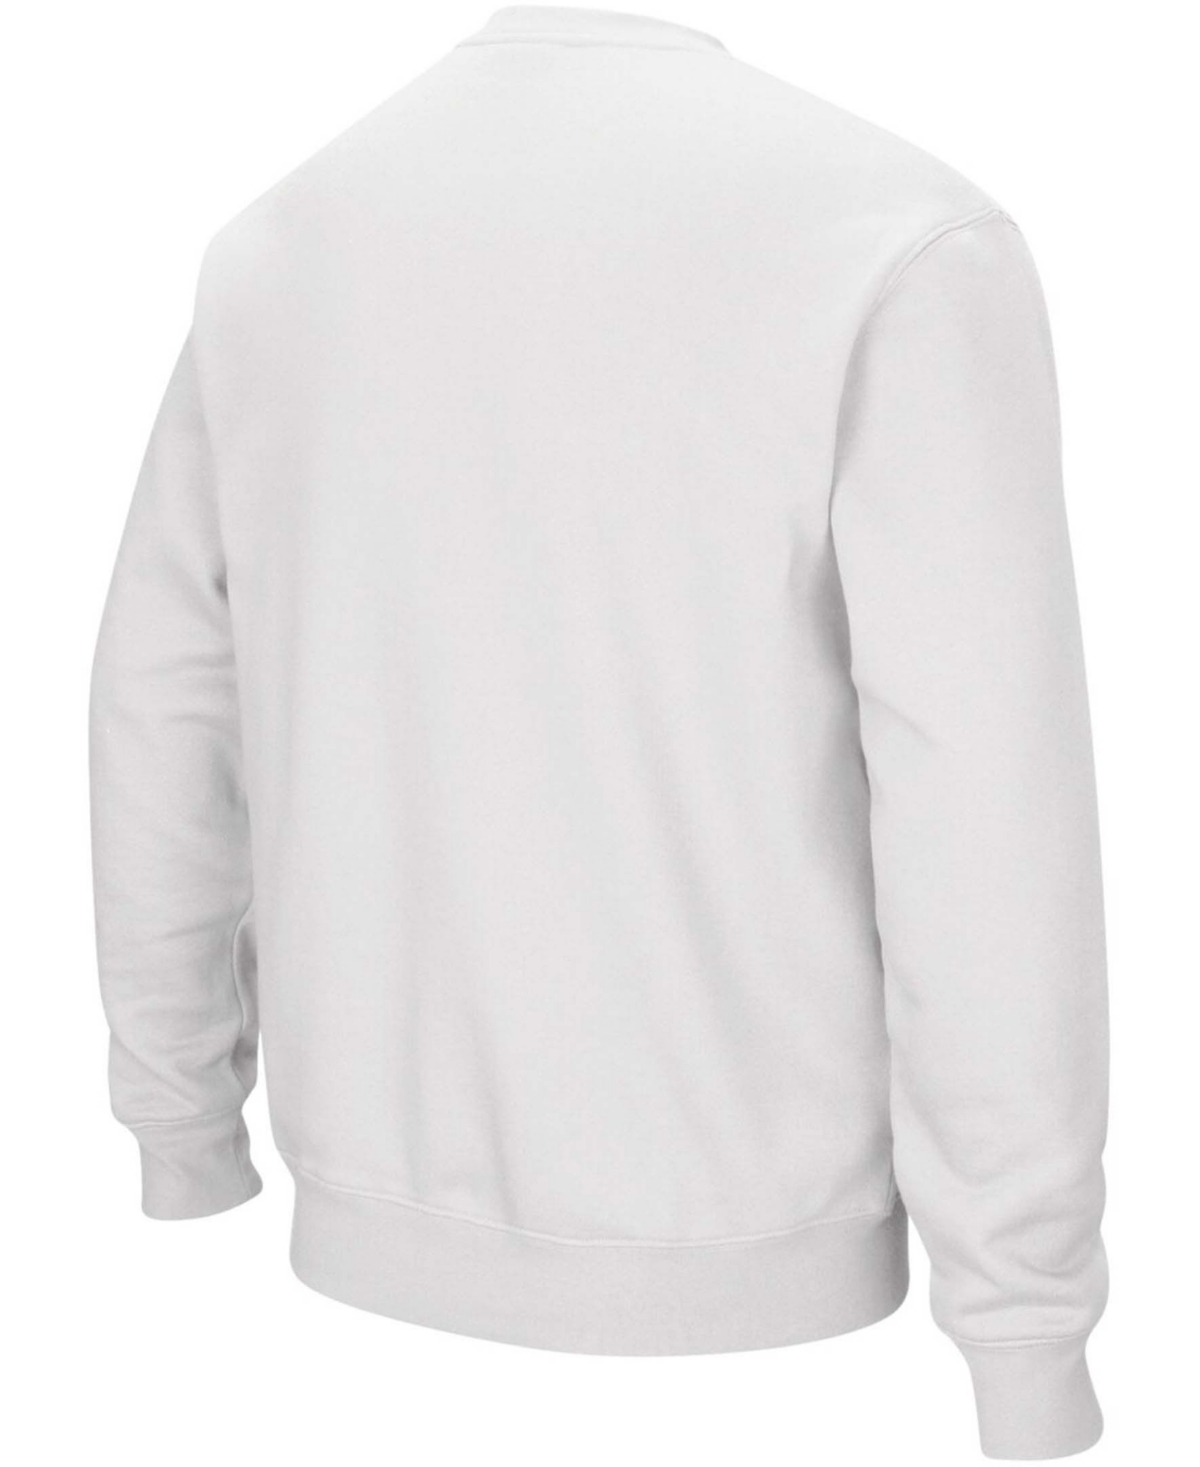 Shop Colosseum Men's White Alabama Crimson Tide Arch Logo Crew Neck Sweatshirt